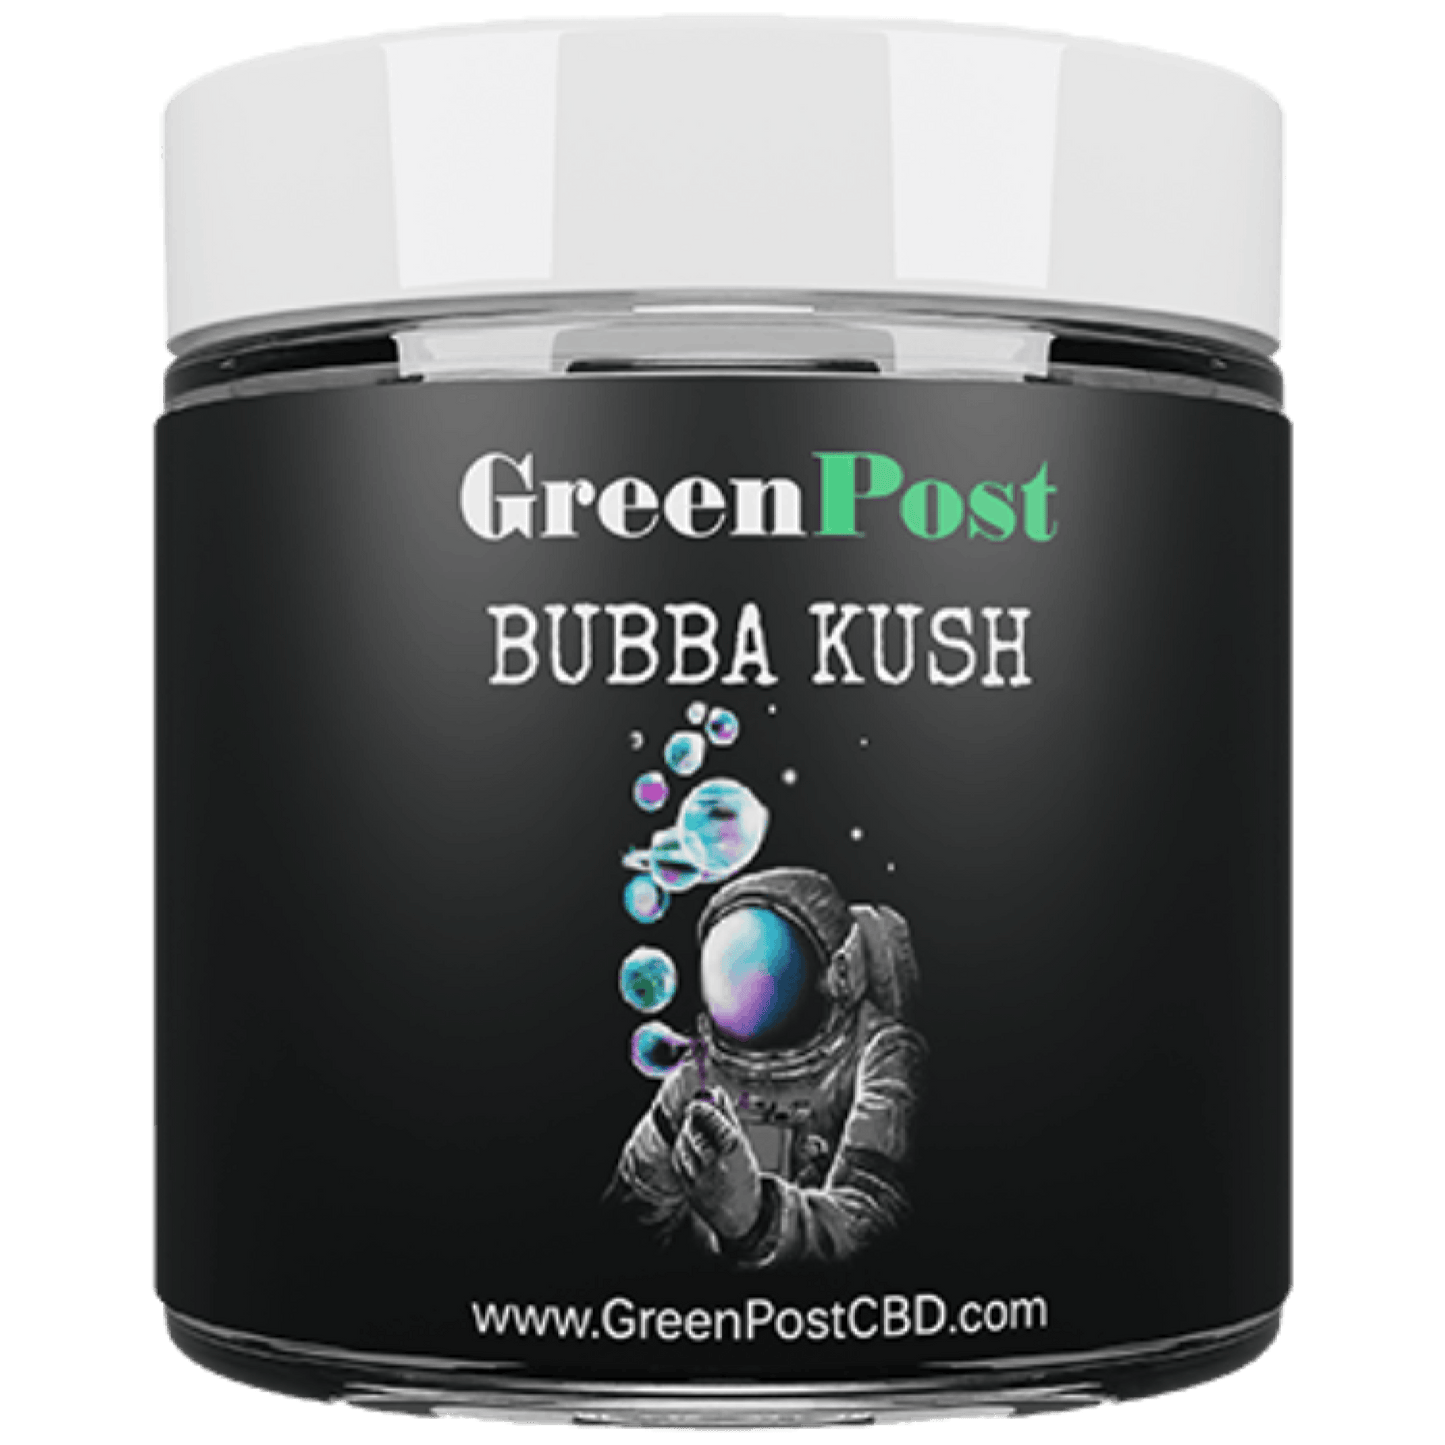 Bubba Kush (Indica) - GreenPost CBD - www.GreenPostCBD.com